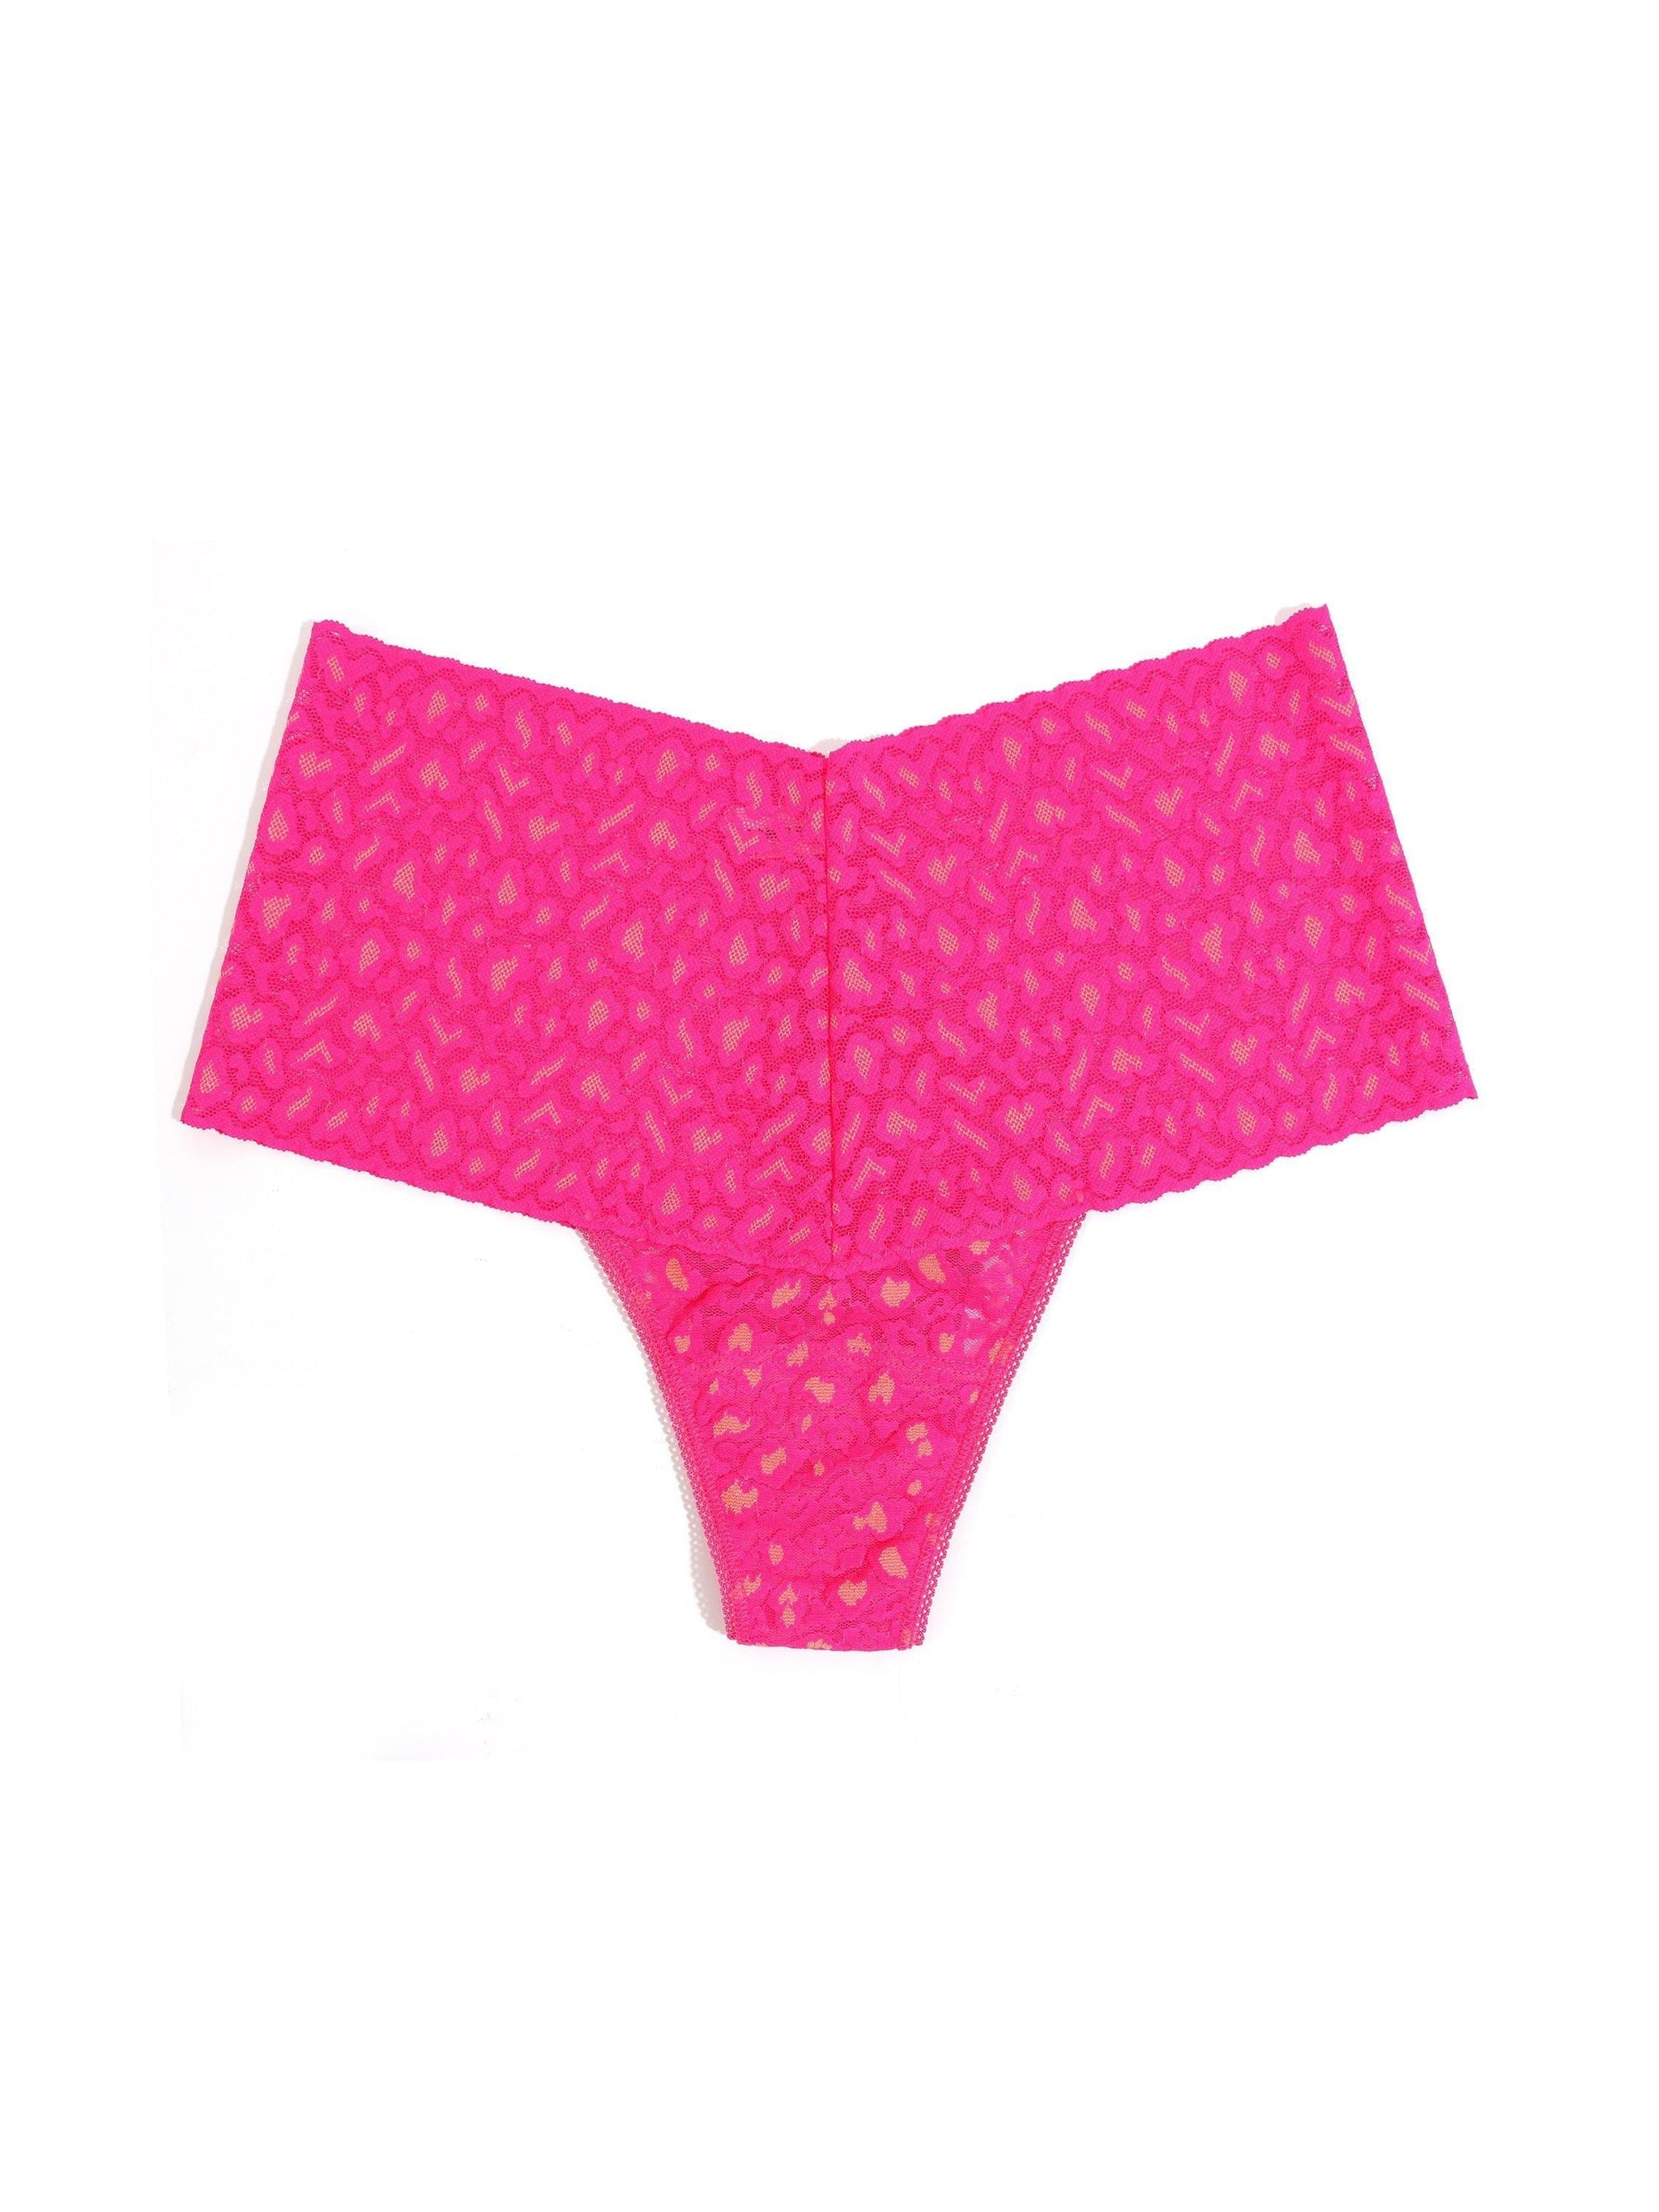 Cross-Dyed Leopard Retro Thong Siesta Pink